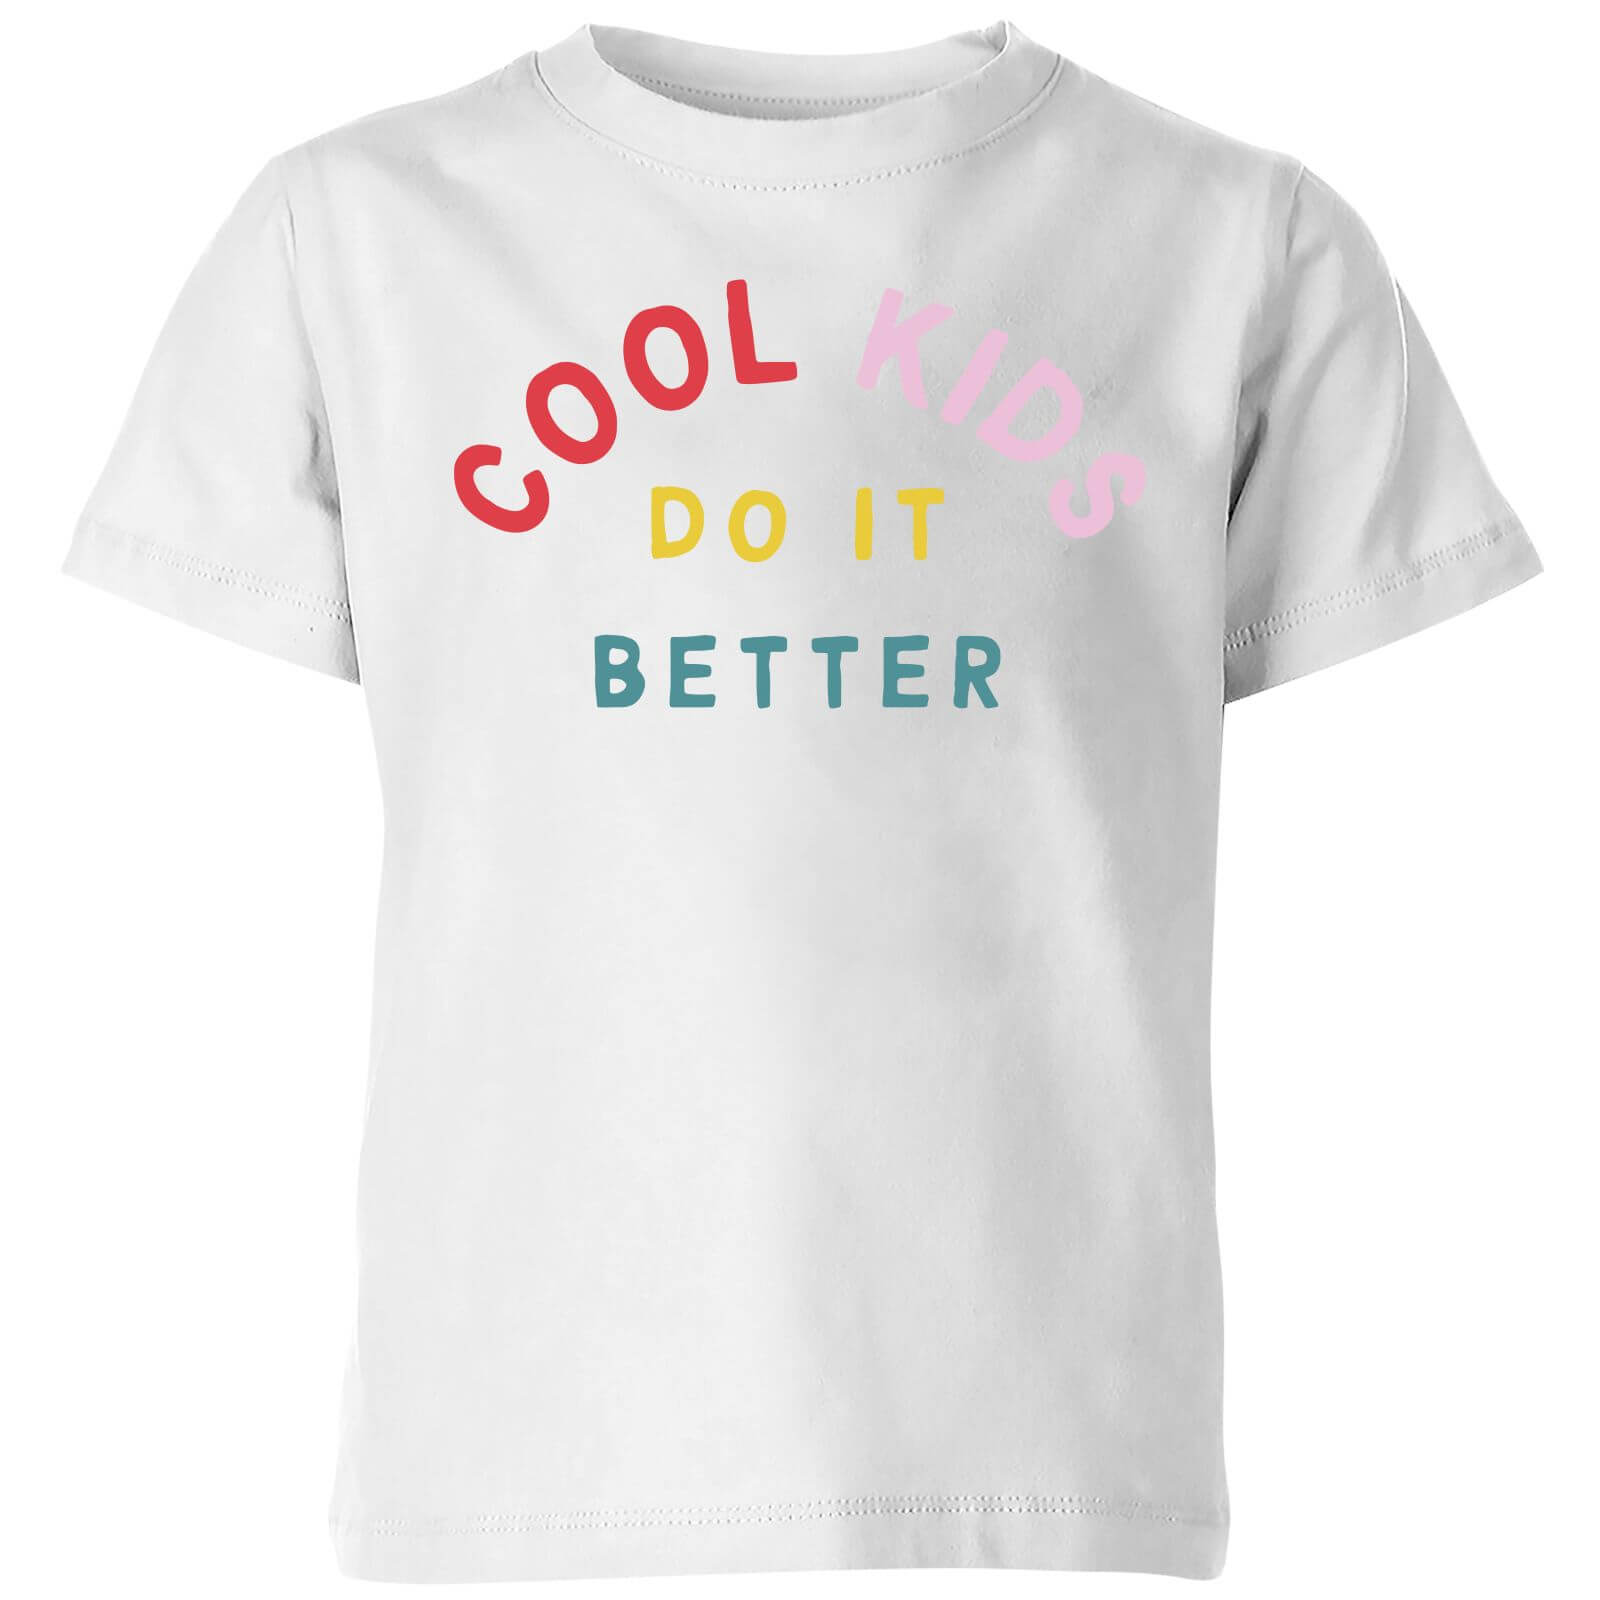 My Little Rascal Cool Kids Do It Better Kids' T-Shirt - White - 3-4 Years - White